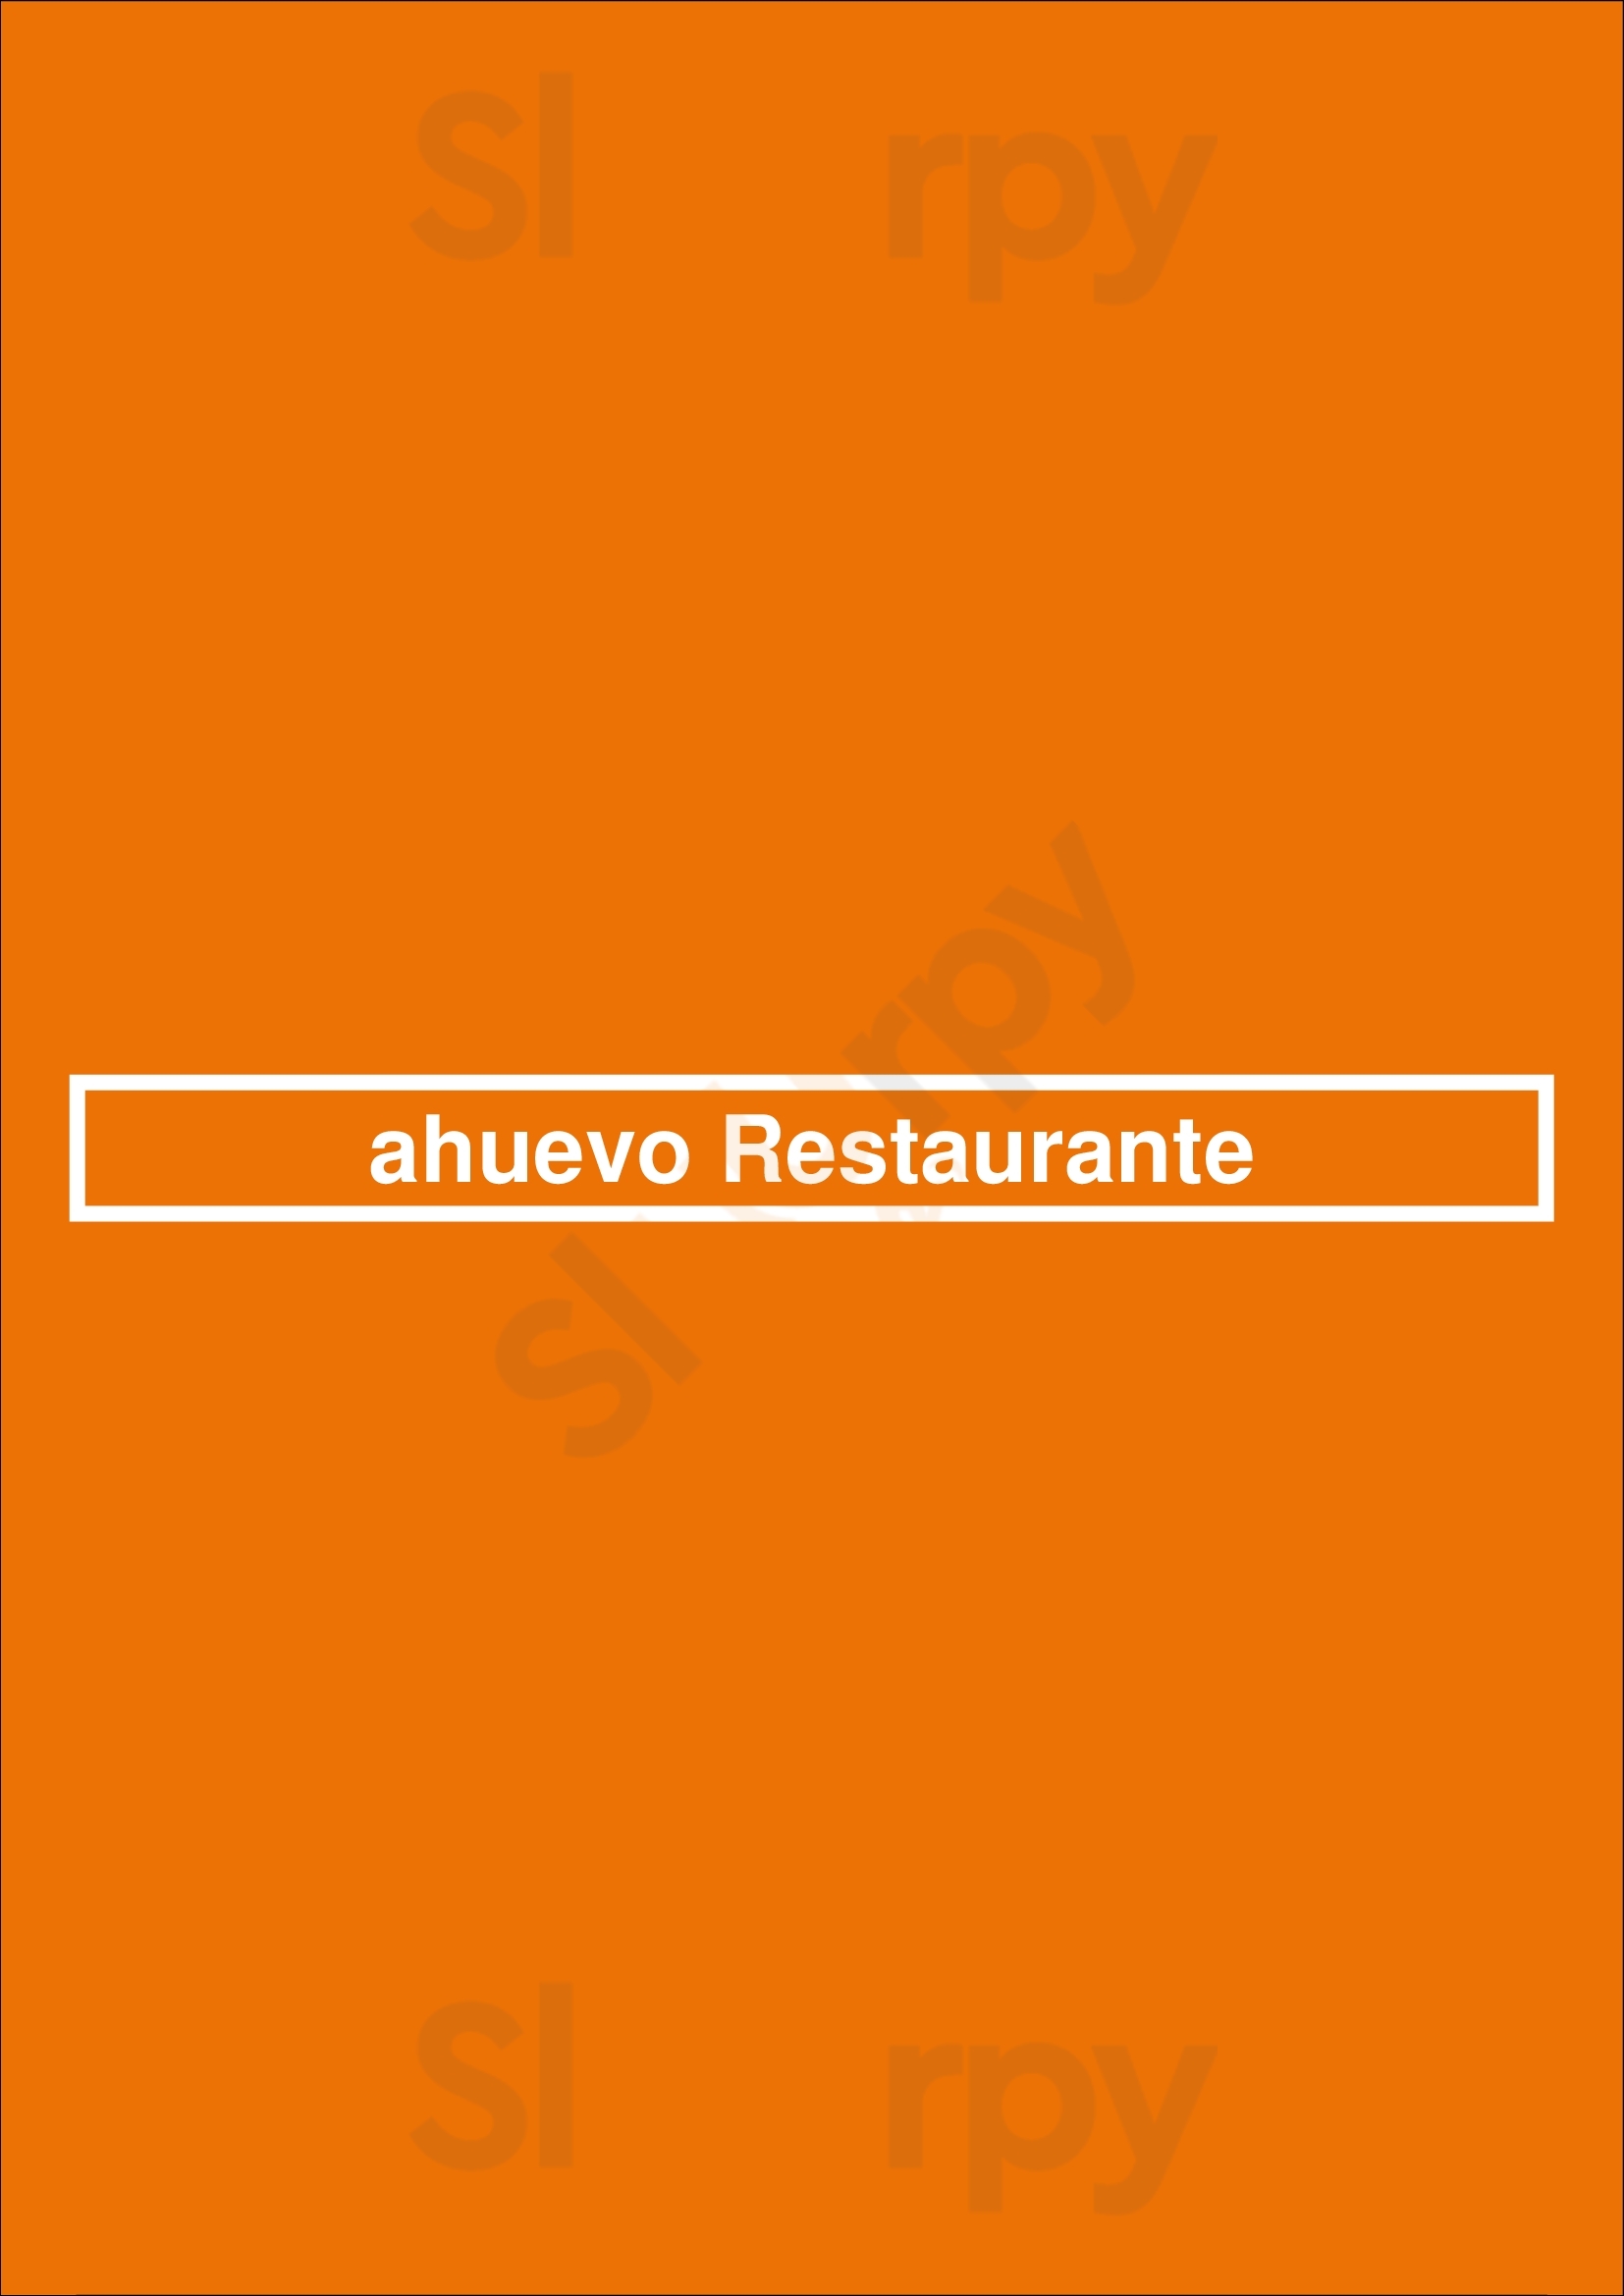 Ahuevo Restaurante Valencia Menu - 1